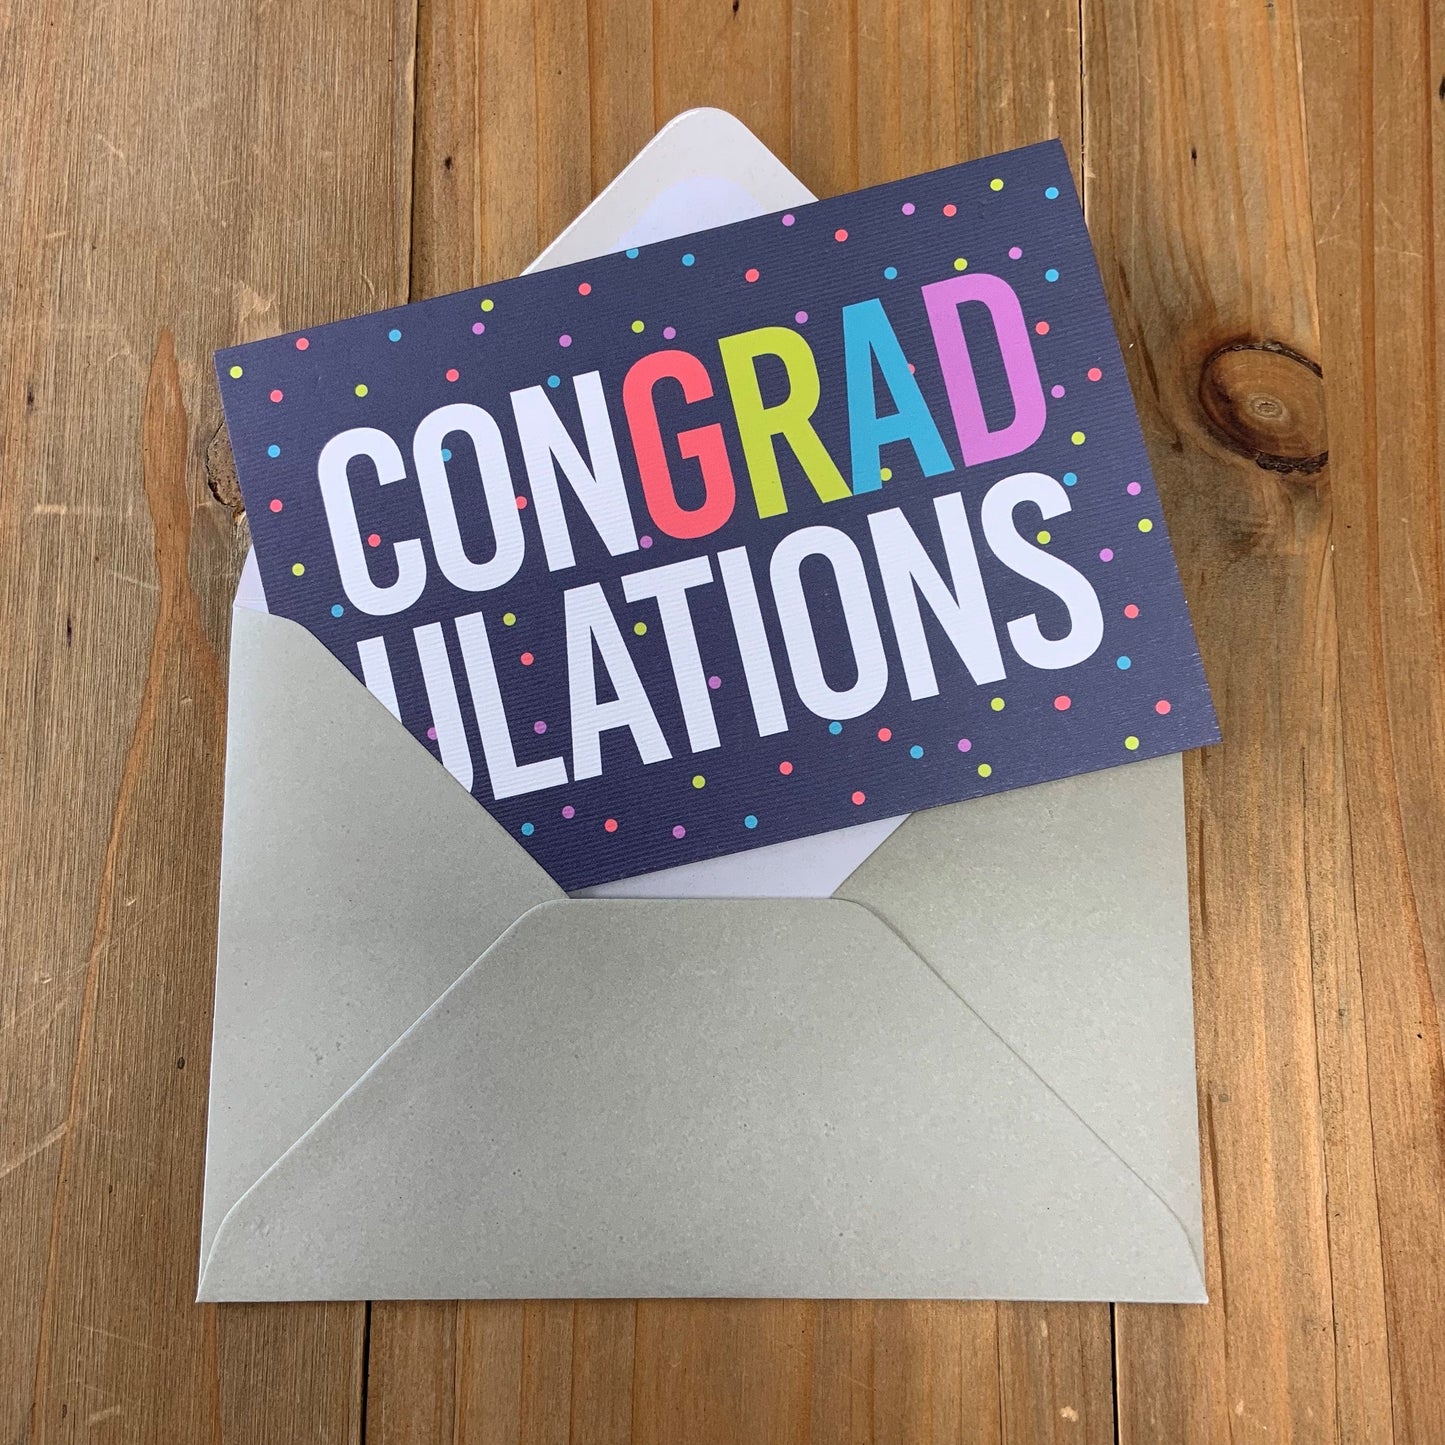 ConGRADulations Graduation Celebration Card & Pin Badge | University Degree Congratulations Greetings Card UK Design